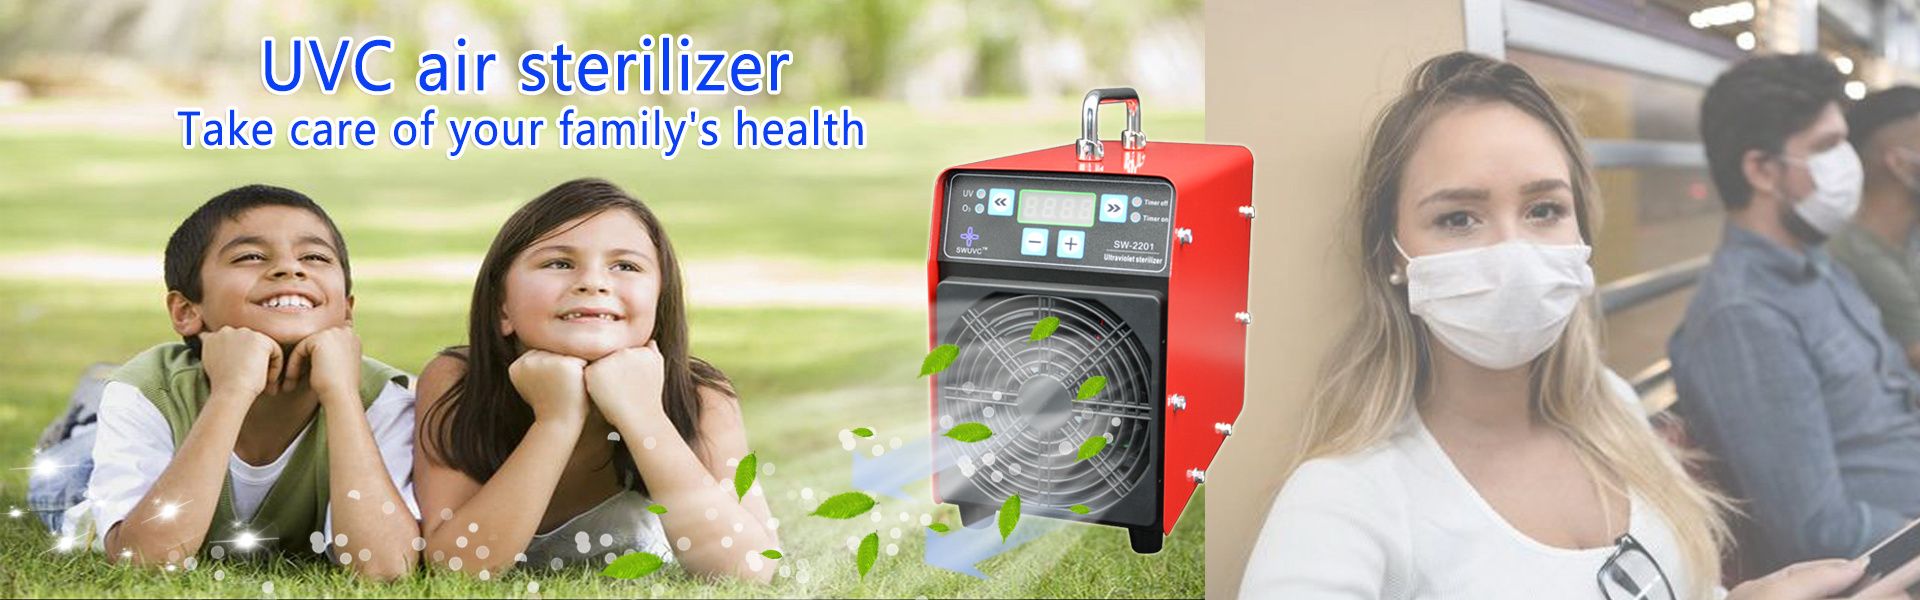 esterilización ultravioleta, purificador de aire uvc, noticias covid19,Dongguan 3d Health Technology Co., LTD